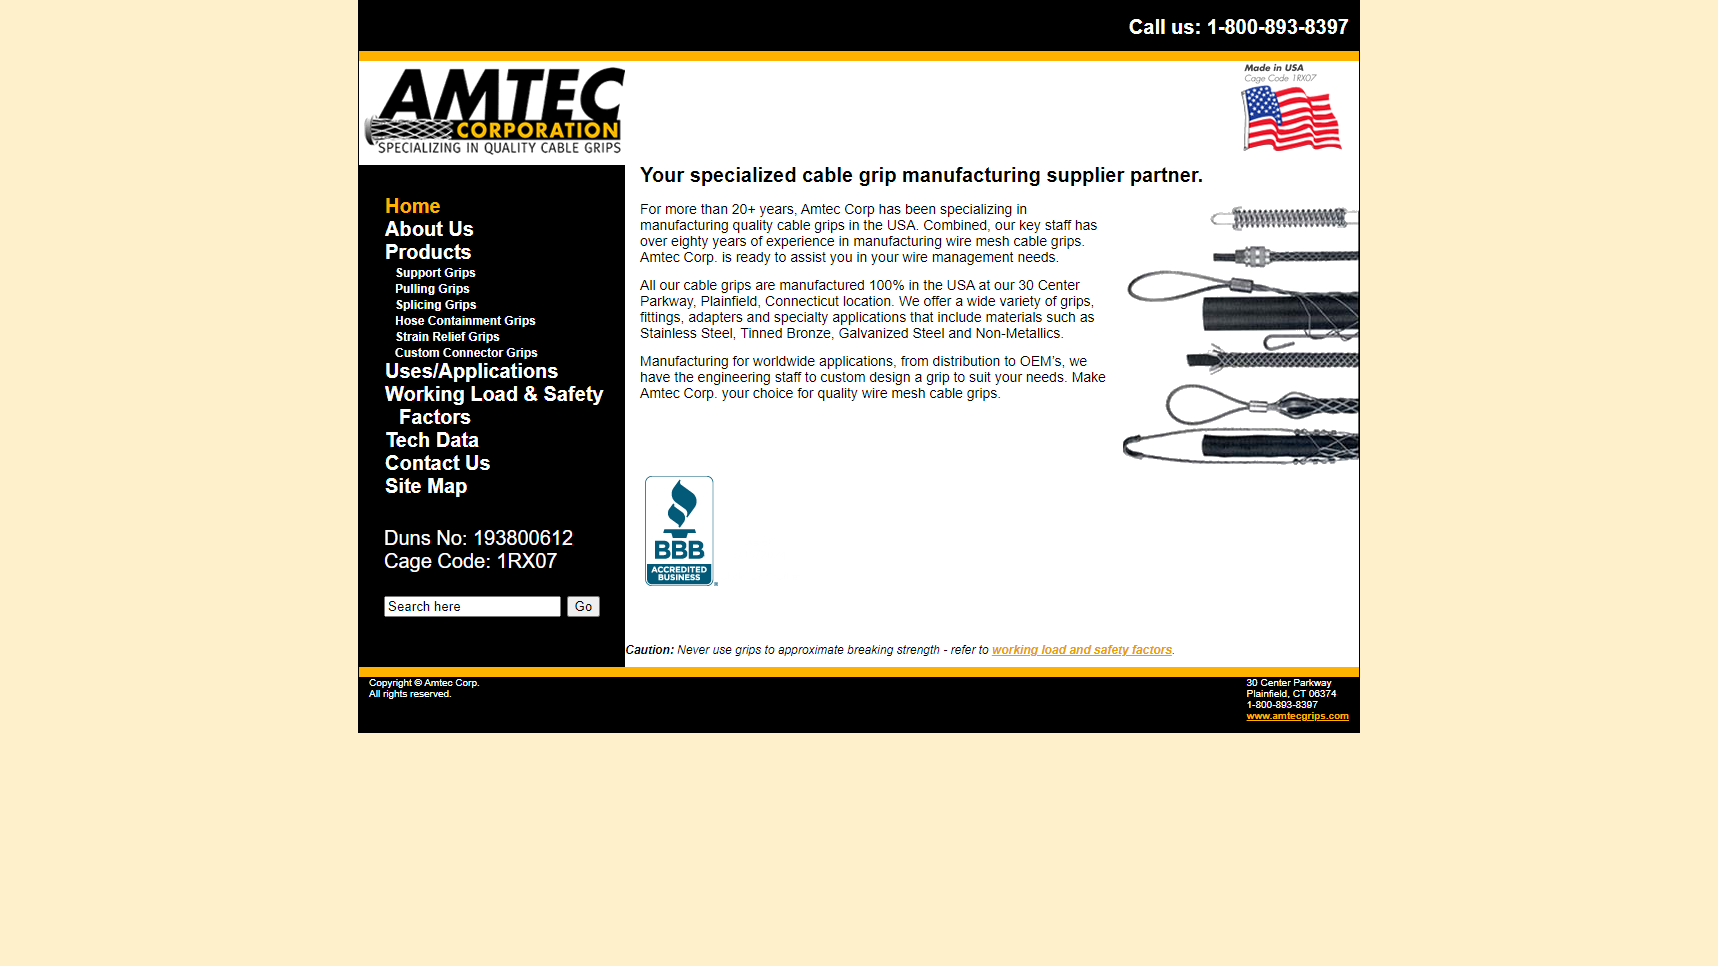 Amtec Grips - Cable Gripper Manufacturer